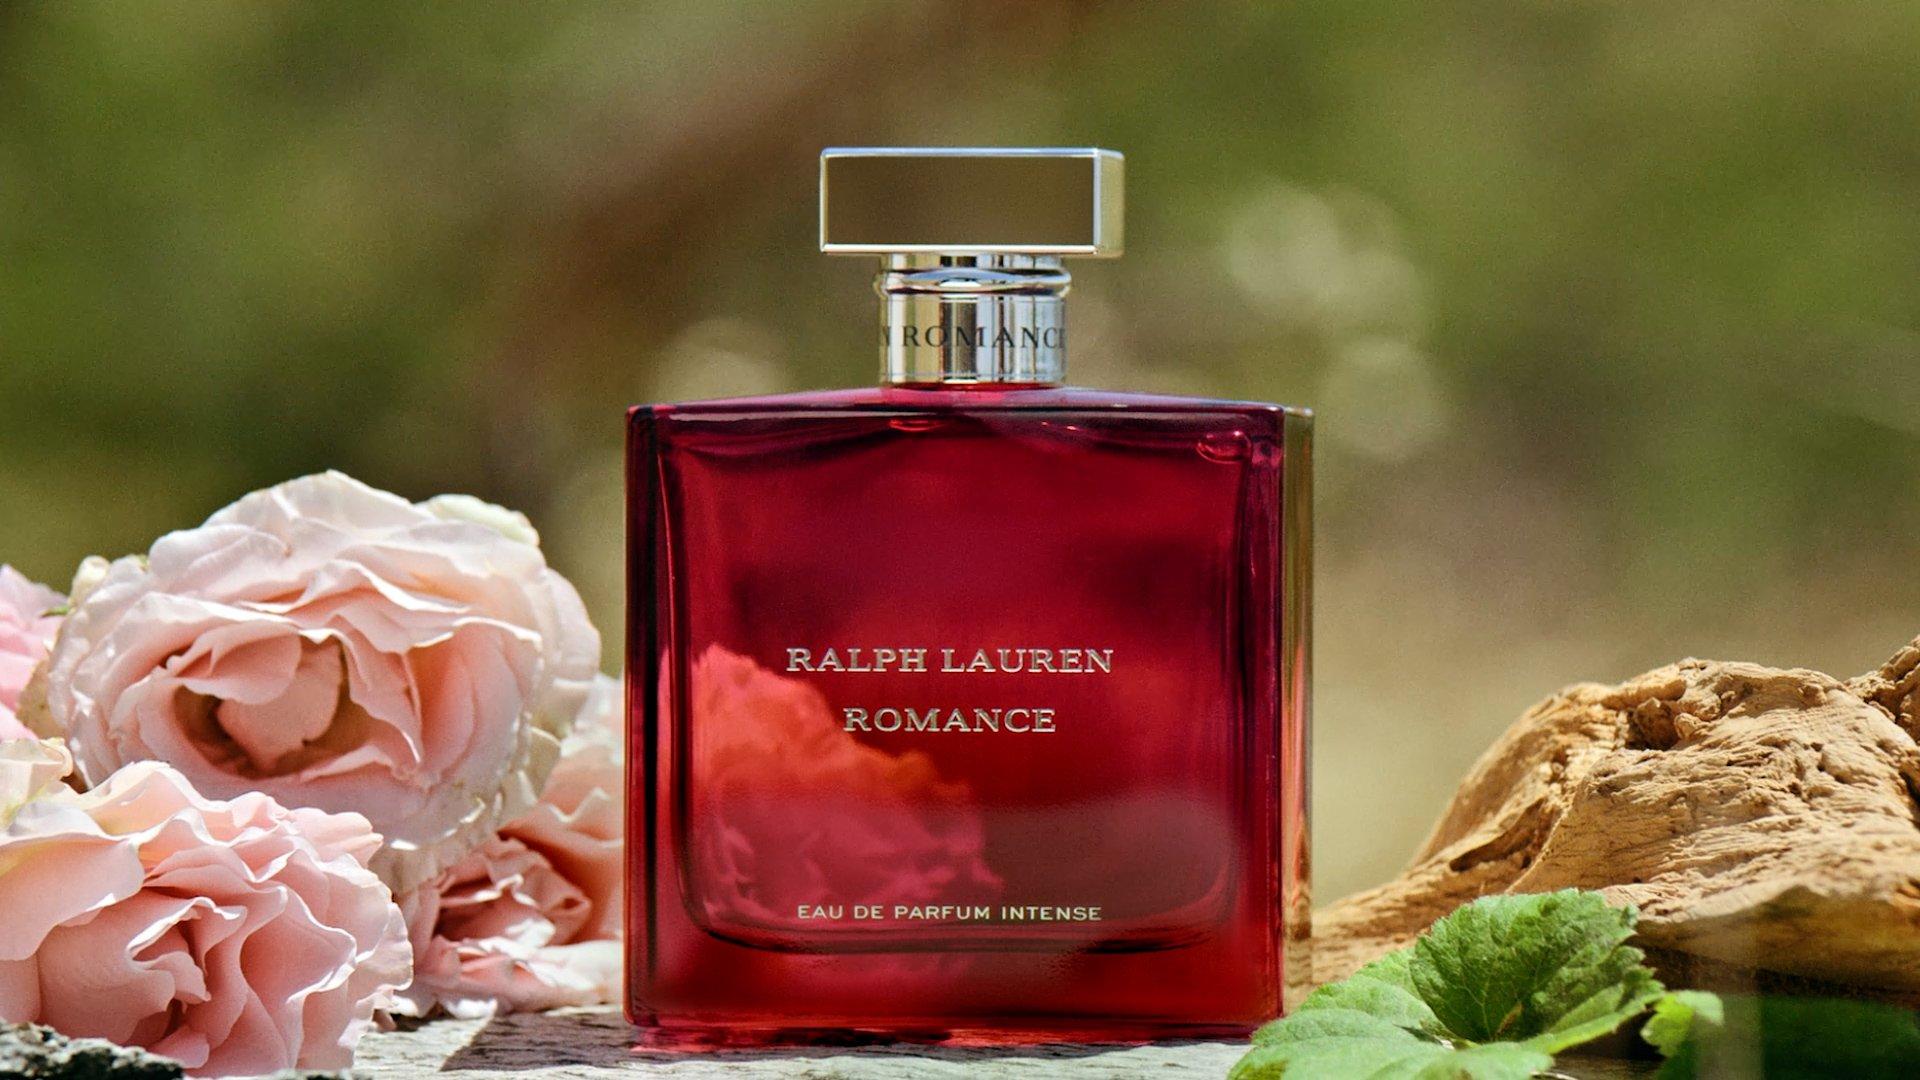 3.4 oz Romance Eau de Parfum Intense - Ralph Lauren